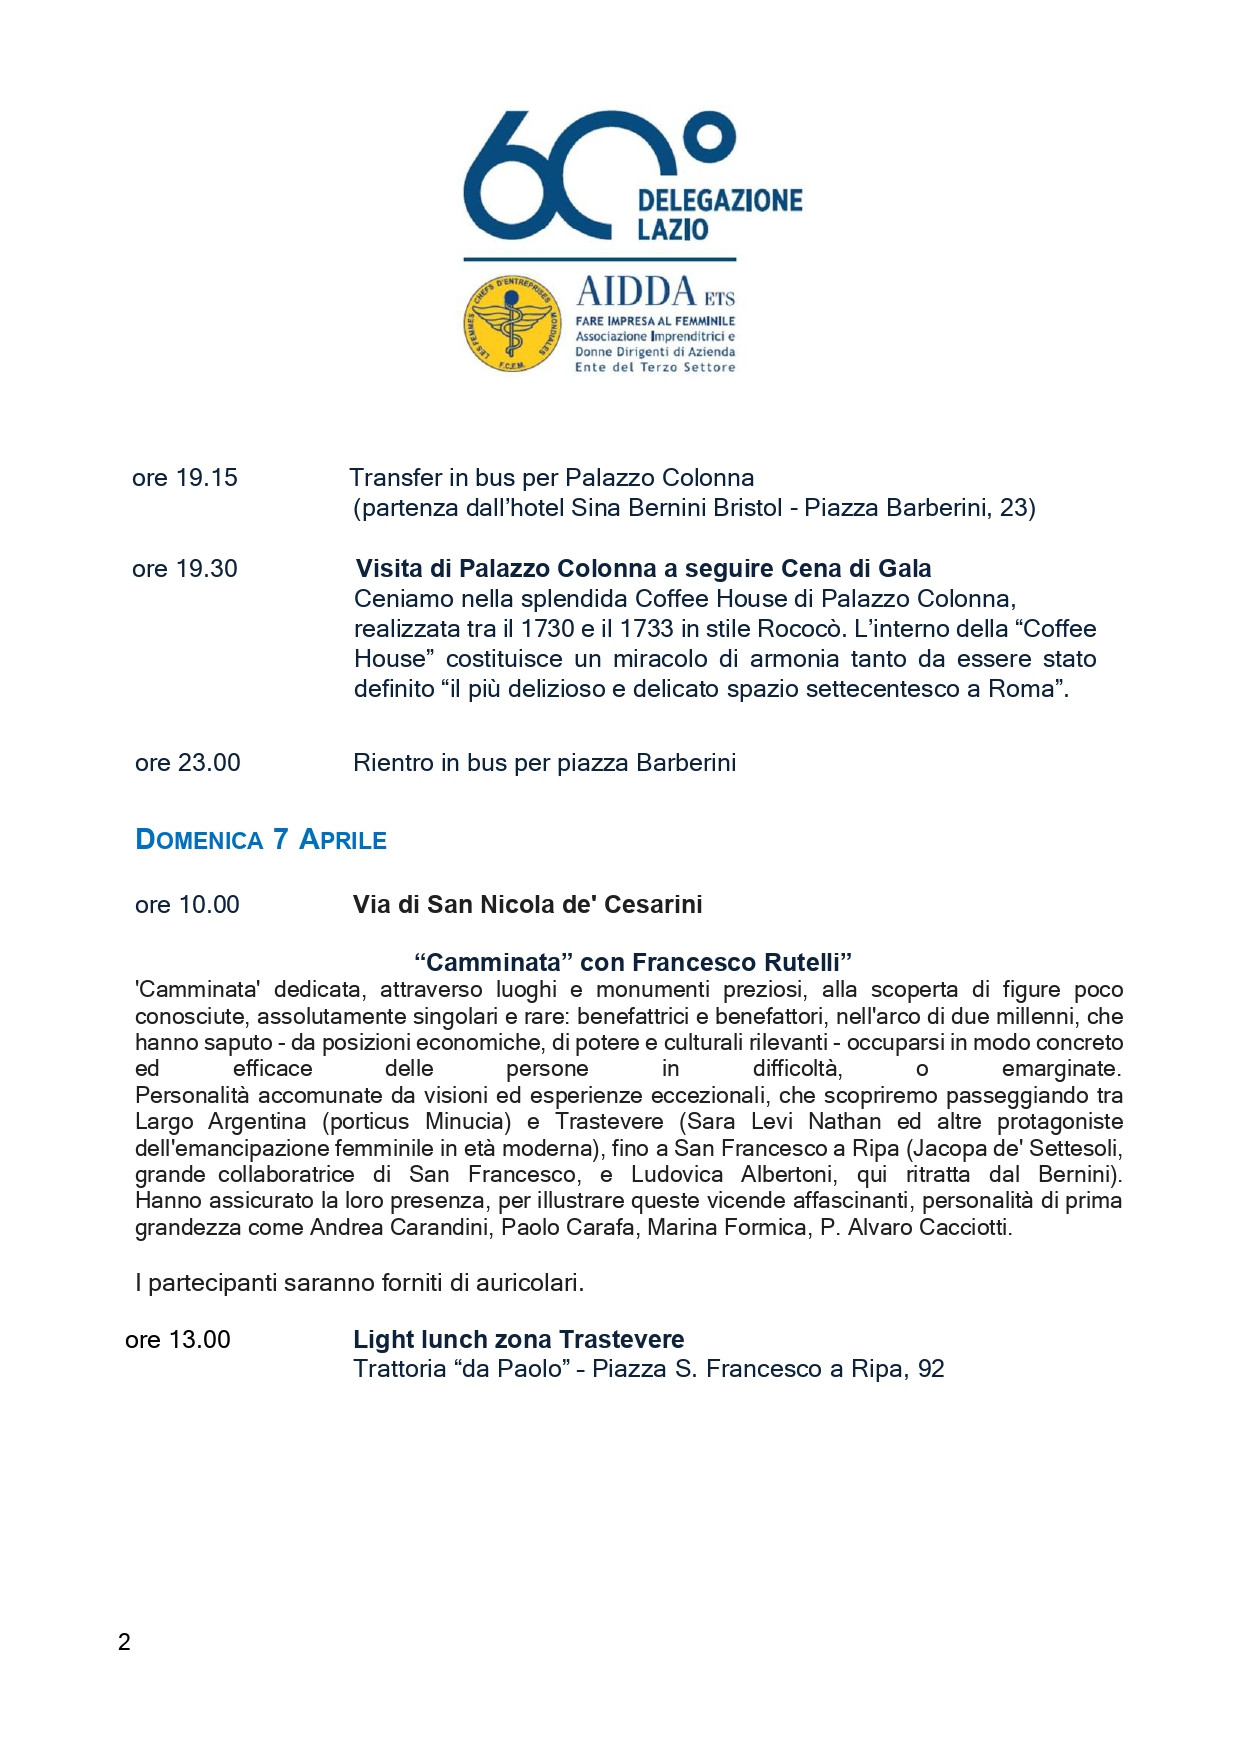 Programa 60° AIDDA Lazio_page-0002.jpg